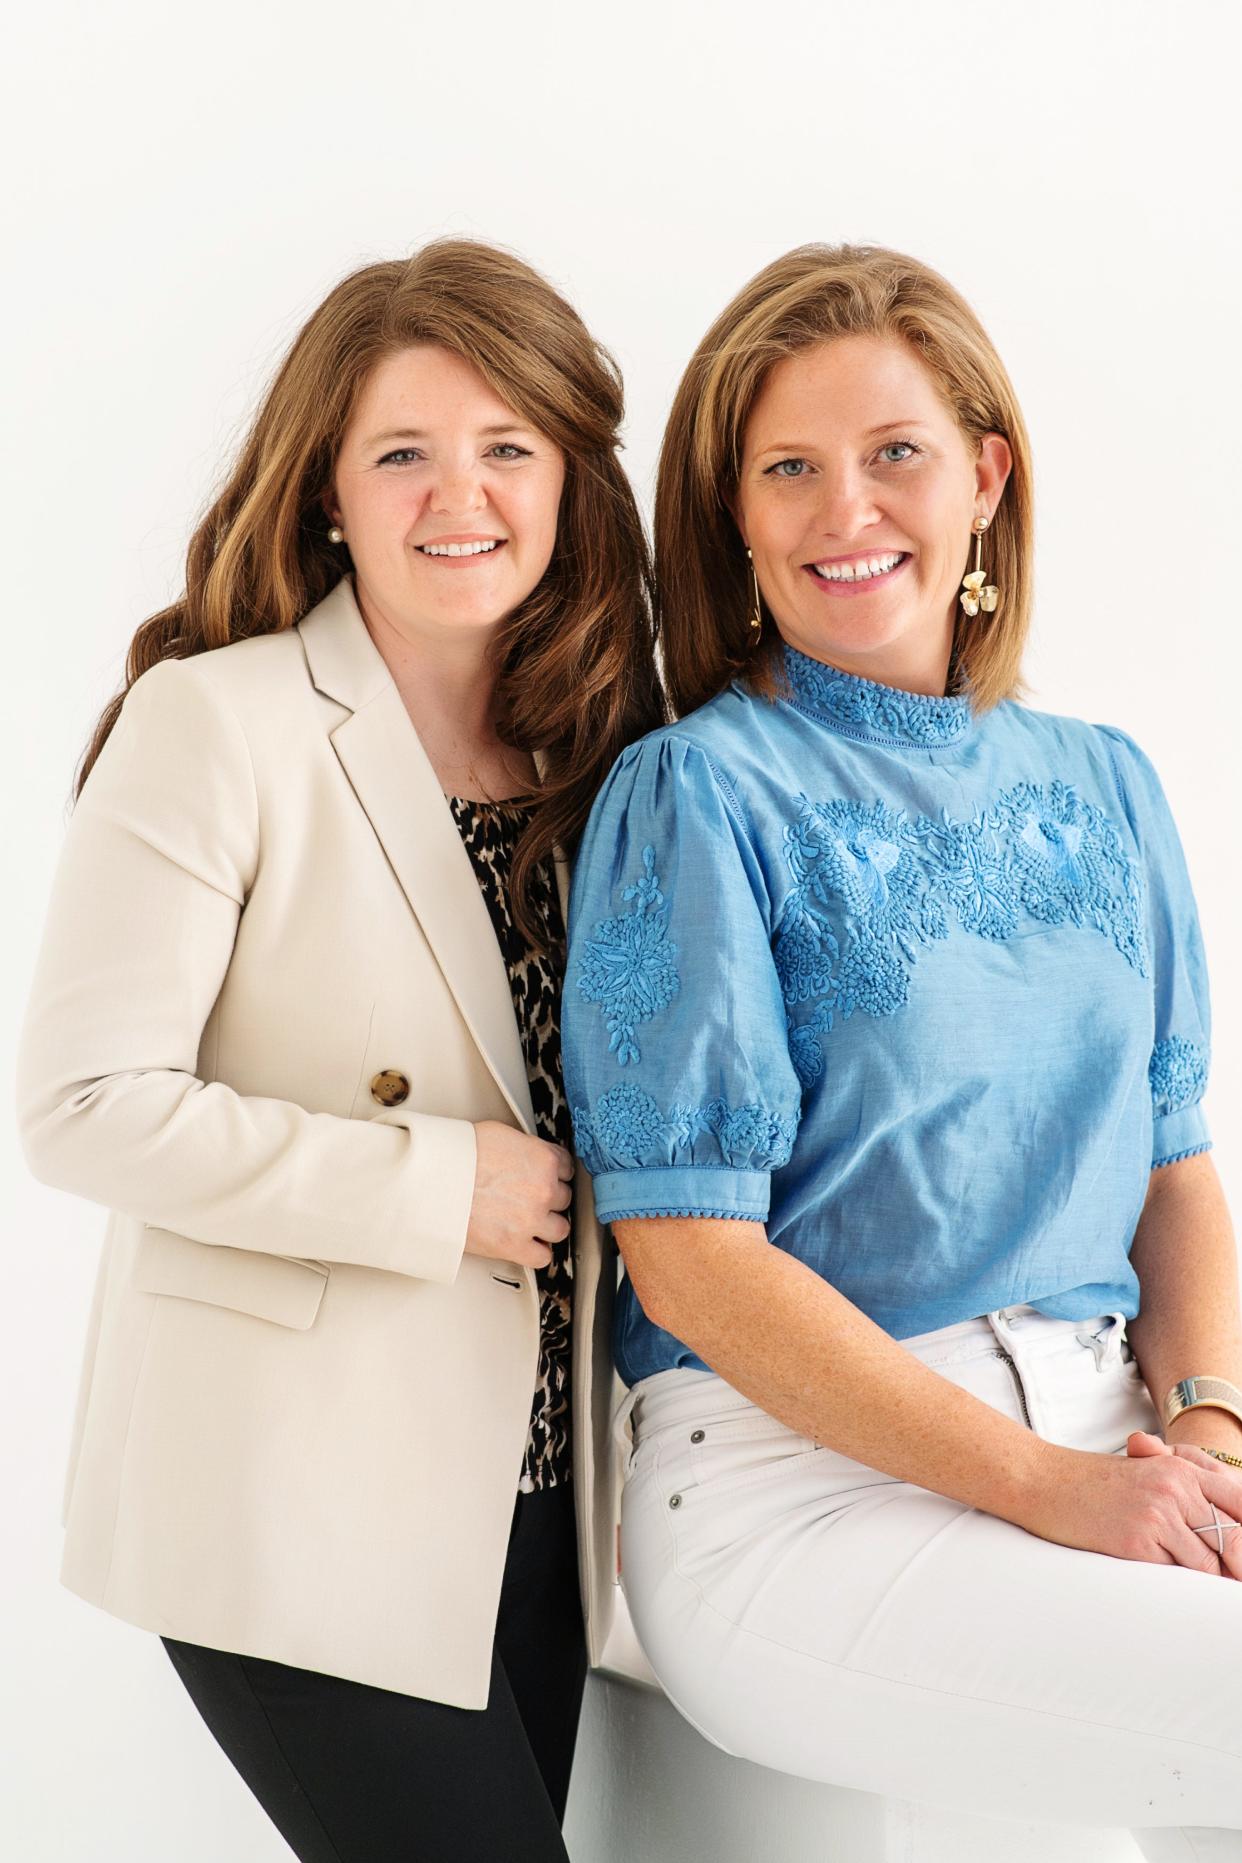 Interior designers Megan Berger, left, and Marjorie Smyth are partners at Adorn Interior Design in Cincinnati